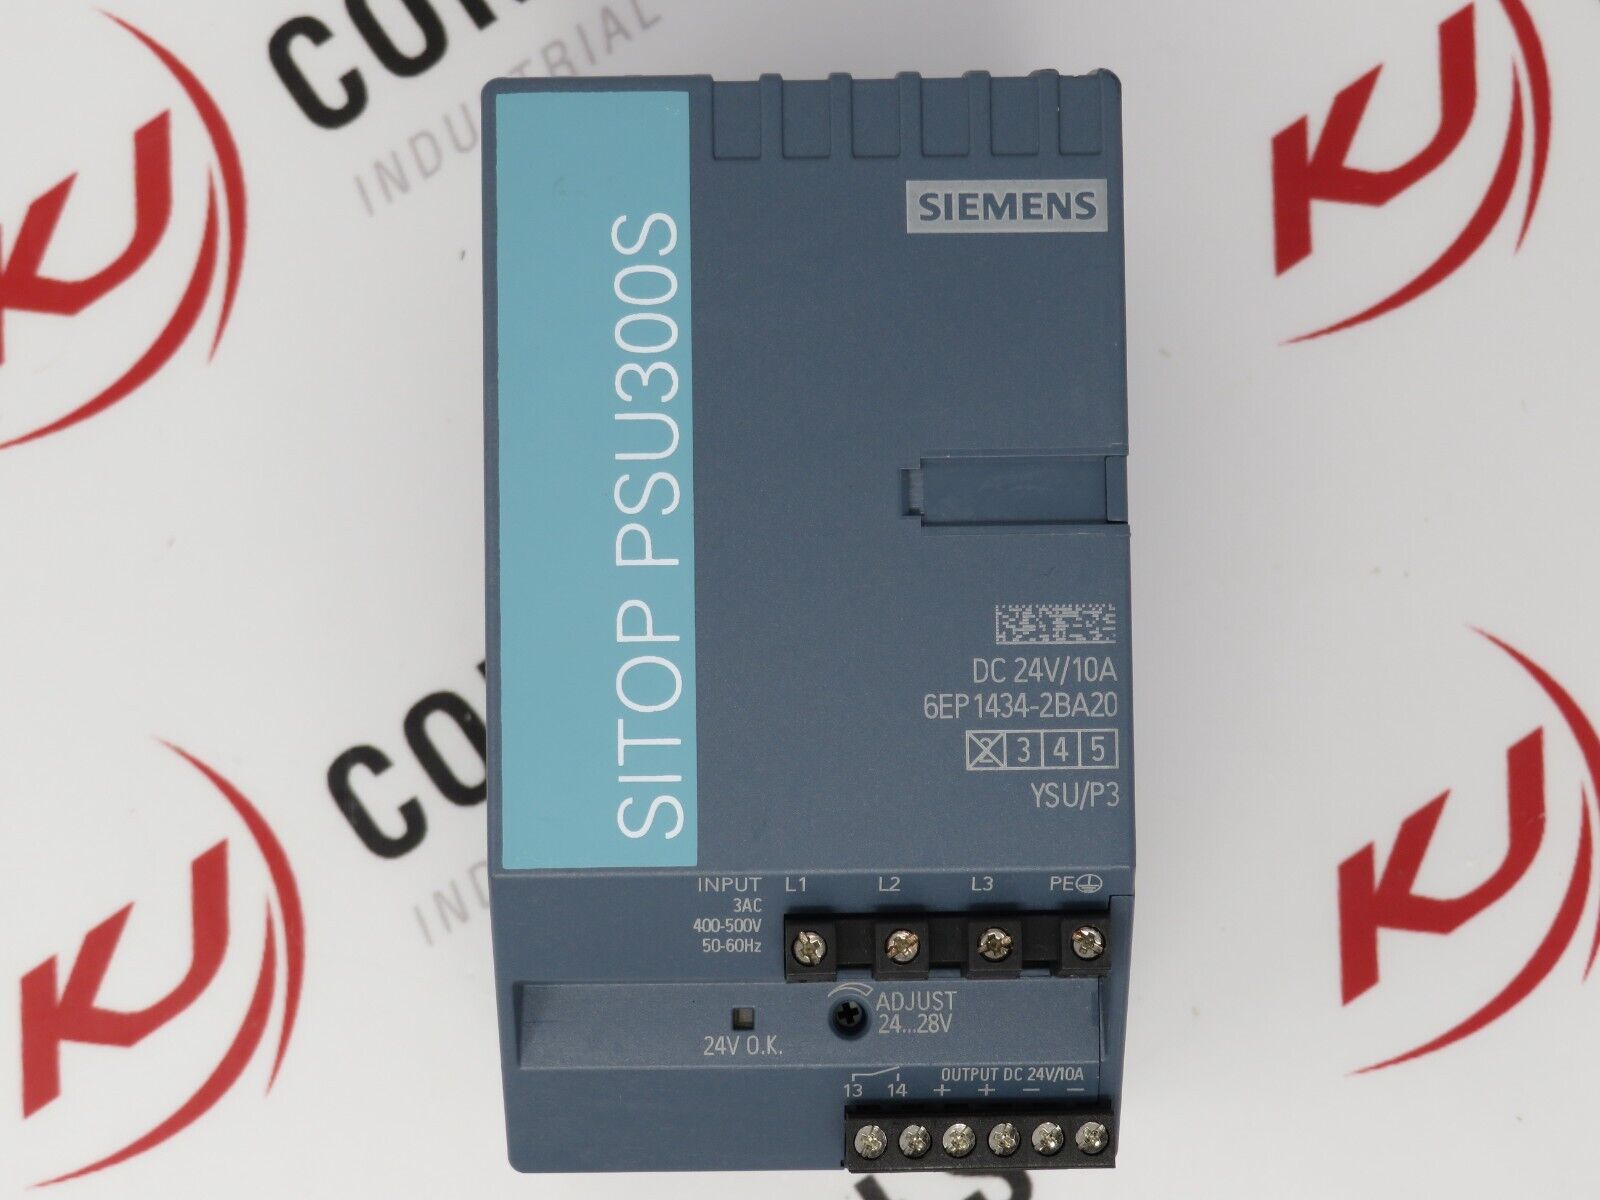 Siemens 6EP1434-2BA20 SITOP PSU300S 24VDC 10A Power Supply